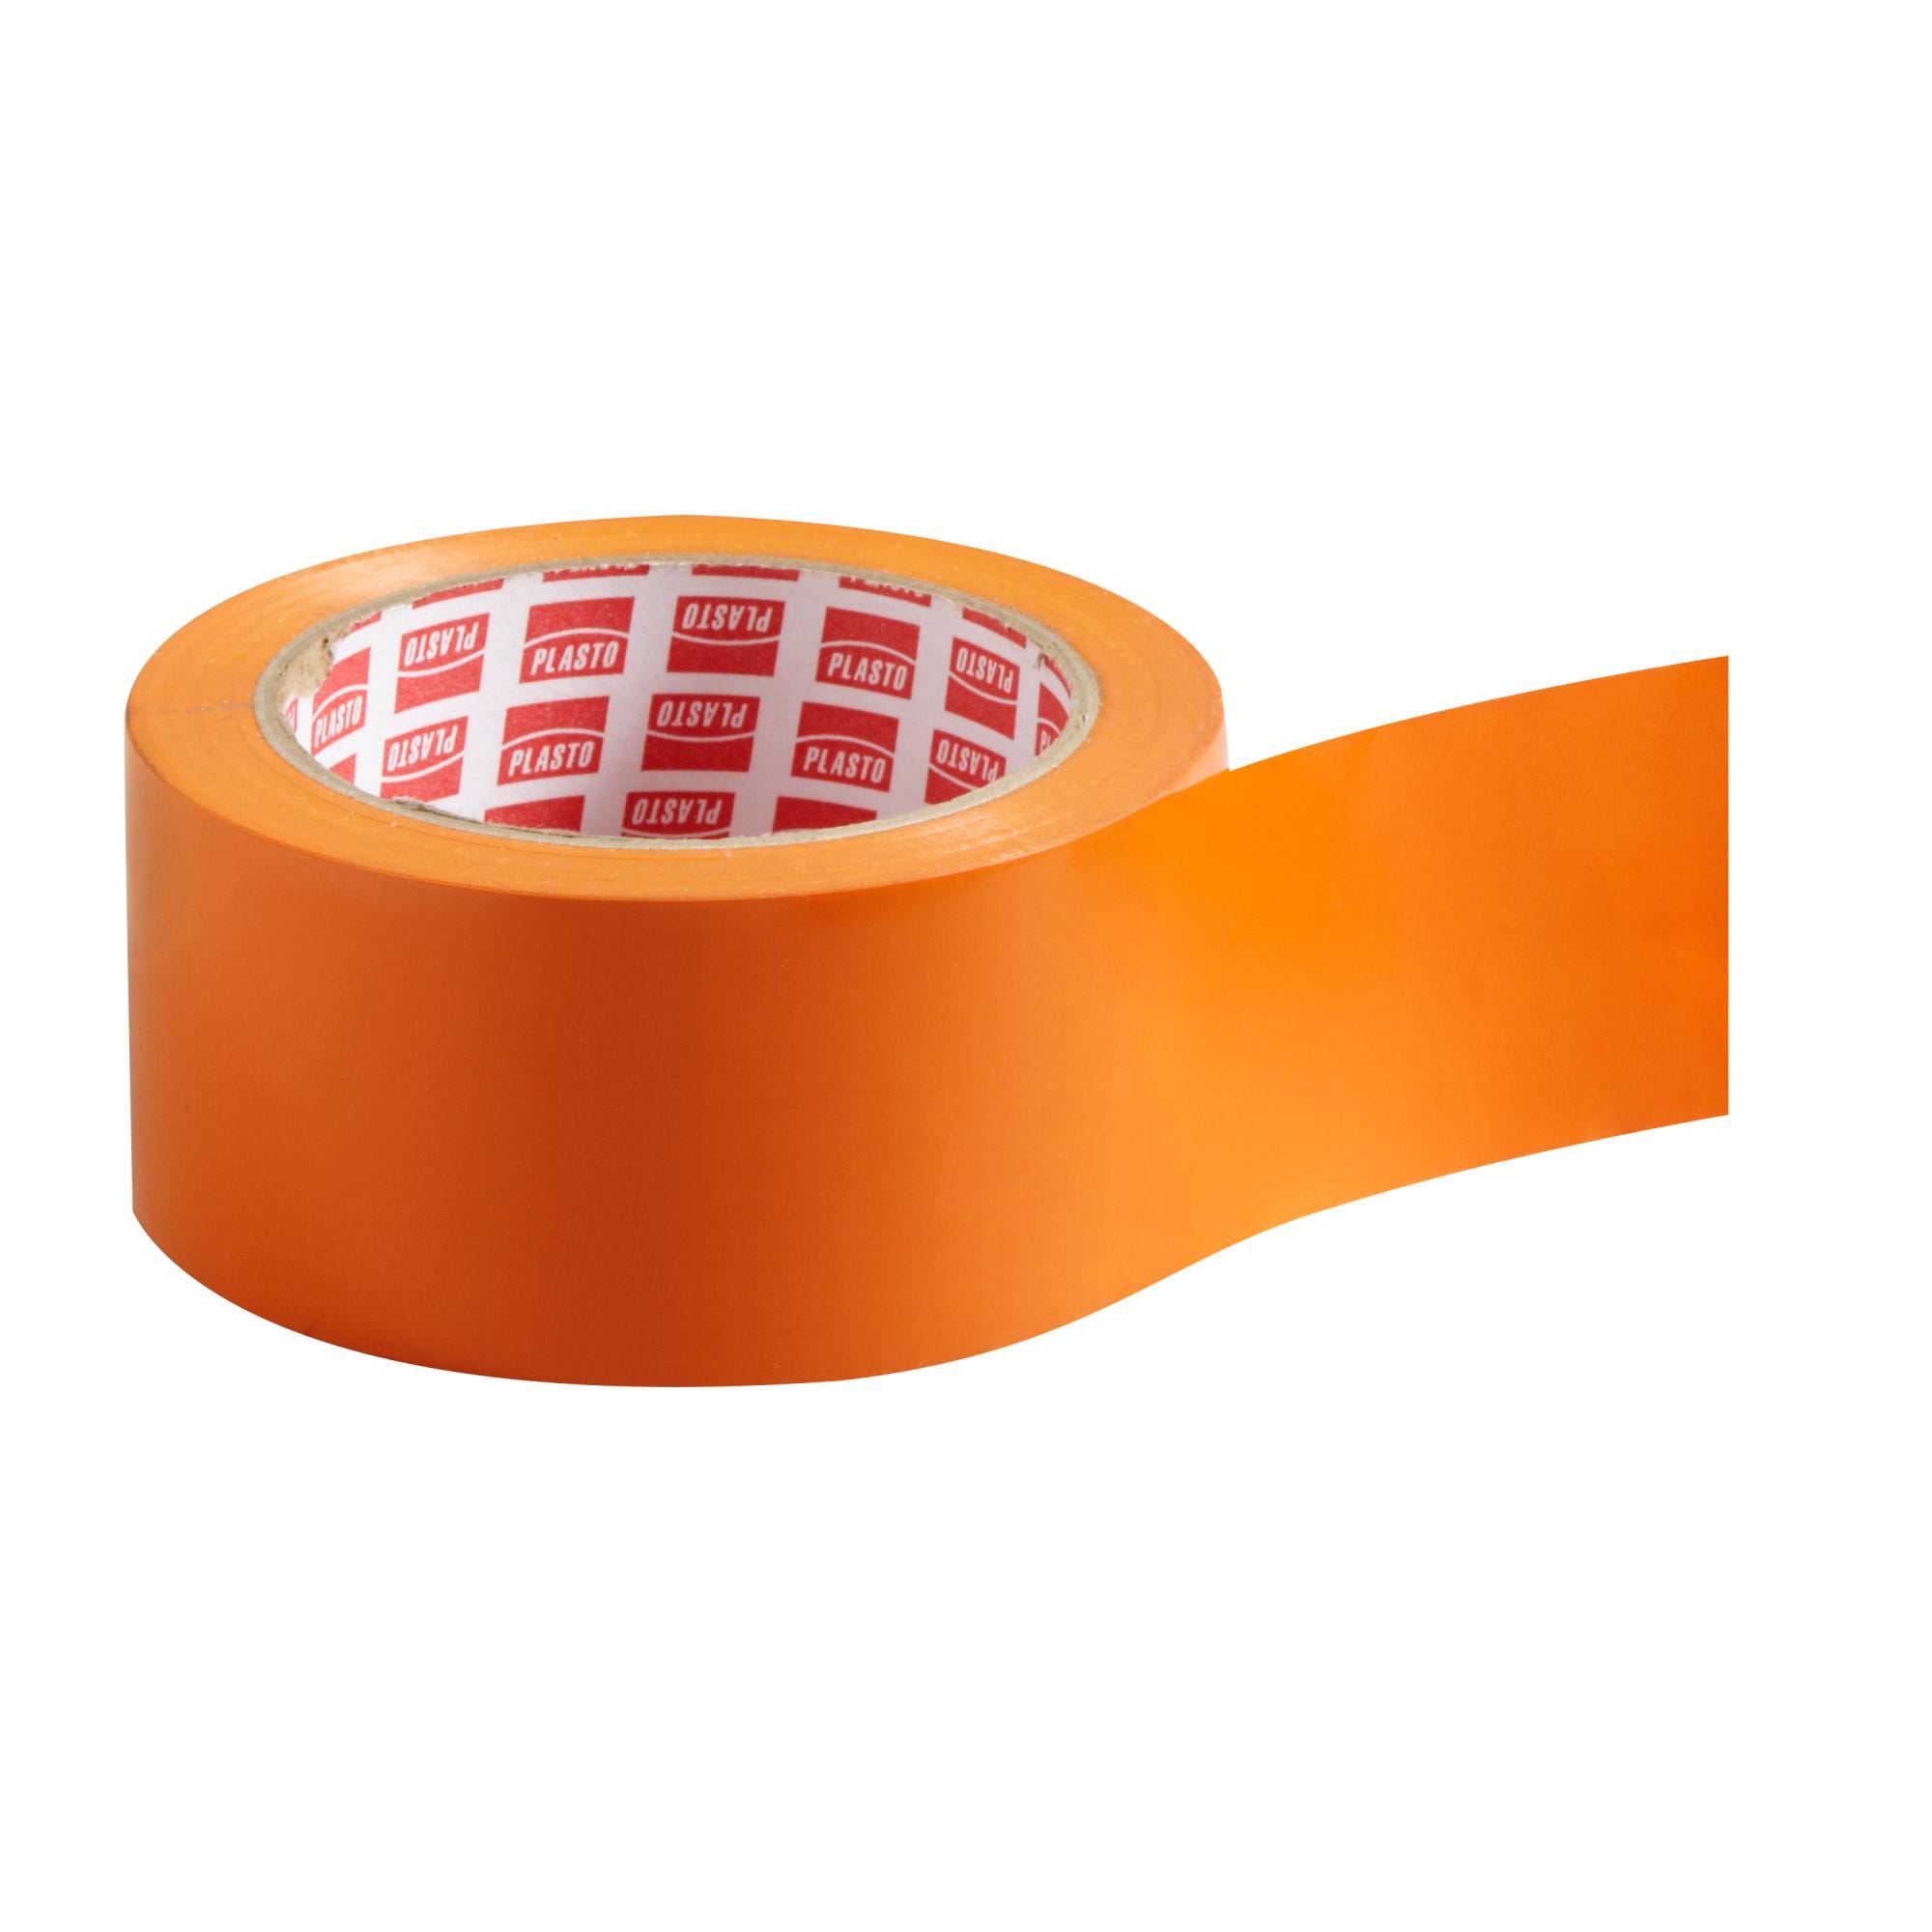 Rouleau adhésif PLASTO multi-usage orange, 50 mm x 33 m